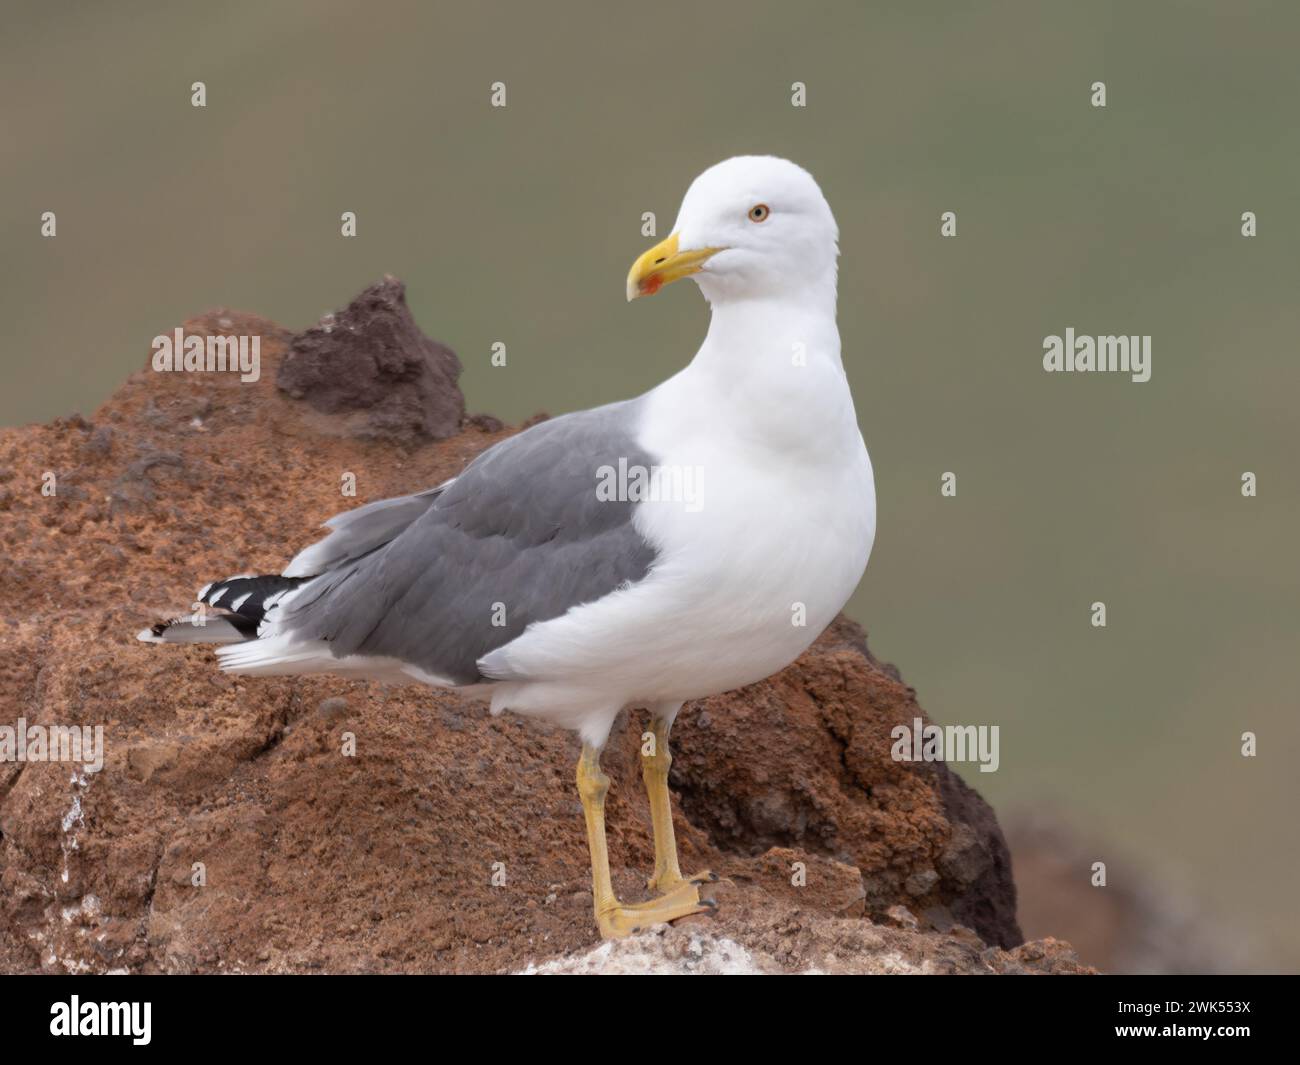 A close up of a yellow-legged gull, Larus michahellis, perch on rocks. Stock Photo